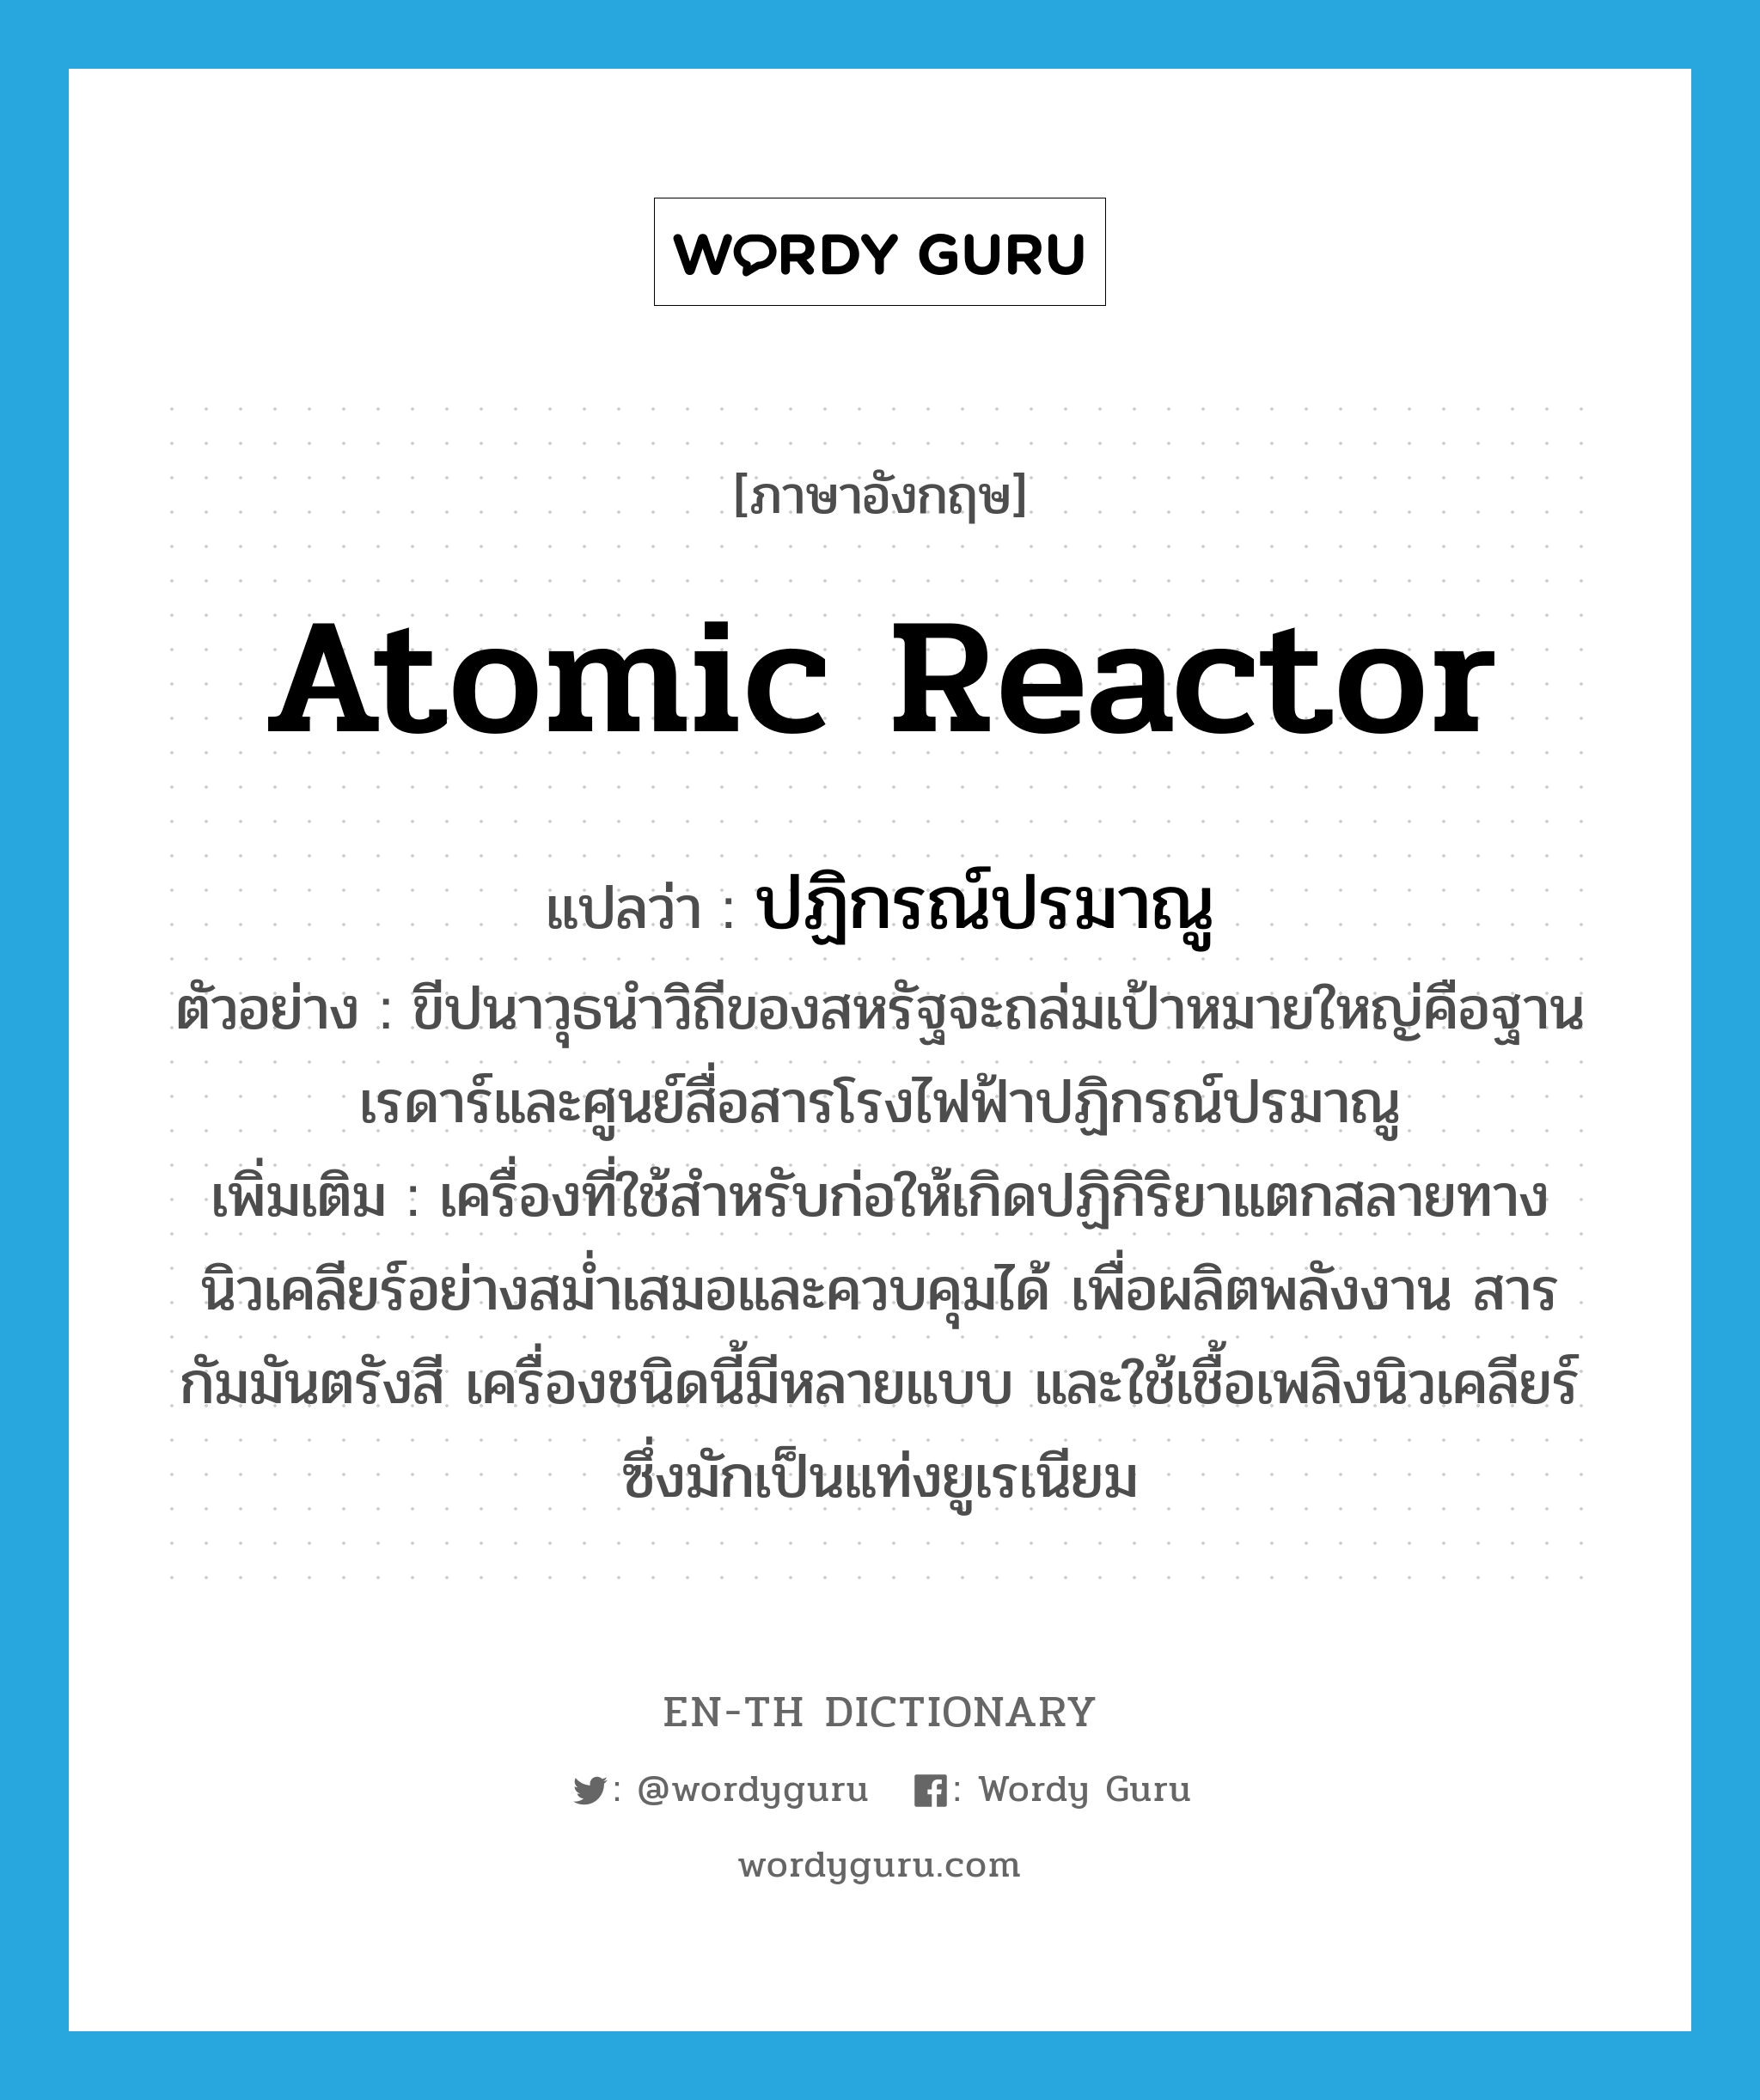 atomic reactor แปลว่า?, คำศัพท์ภาษาอังกฤษ atomic reactor แปลว่า ปฏิกรณ์ปรมาณู ประเภท N ตัวอย่าง ขีปนาวุธนำวิถีของสหรัฐจะถล่มเป้าหมายใหญ่คือฐานเรดาร์และศูนย์สื่อสารโรงไฟฟ้าปฏิกรณ์ปรมาณู เพิ่มเติม เครื่องที่ใช้สำหรับก่อให้เกิดปฏิกิริยาแตกสลายทางนิวเคลียร์อย่างสม่ำเสมอและควบคุมได้ เพื่อผลิตพลังงาน สารกัมมันตรังสี เครื่องชนิดนี้มีหลายแบบ และใช้เชื้อเพลิงนิวเคลียร์ซึ่งมักเป็นแท่งยูเรเนียม หมวด N